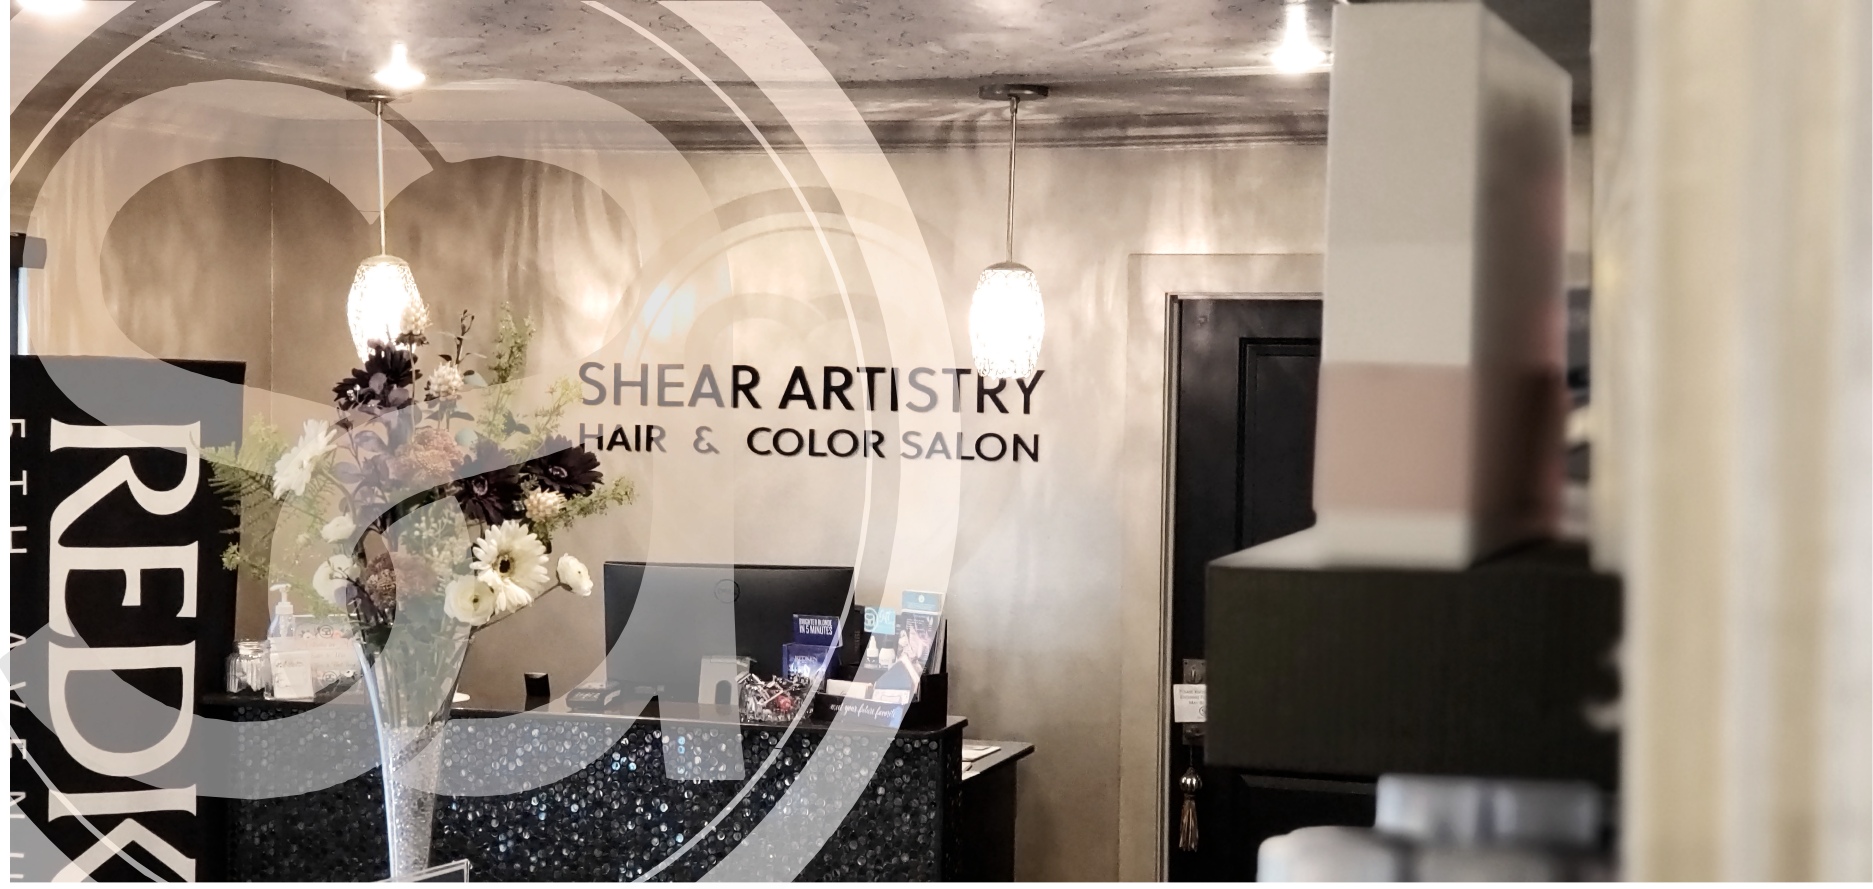 Shear Artistry Hair & Color Salon